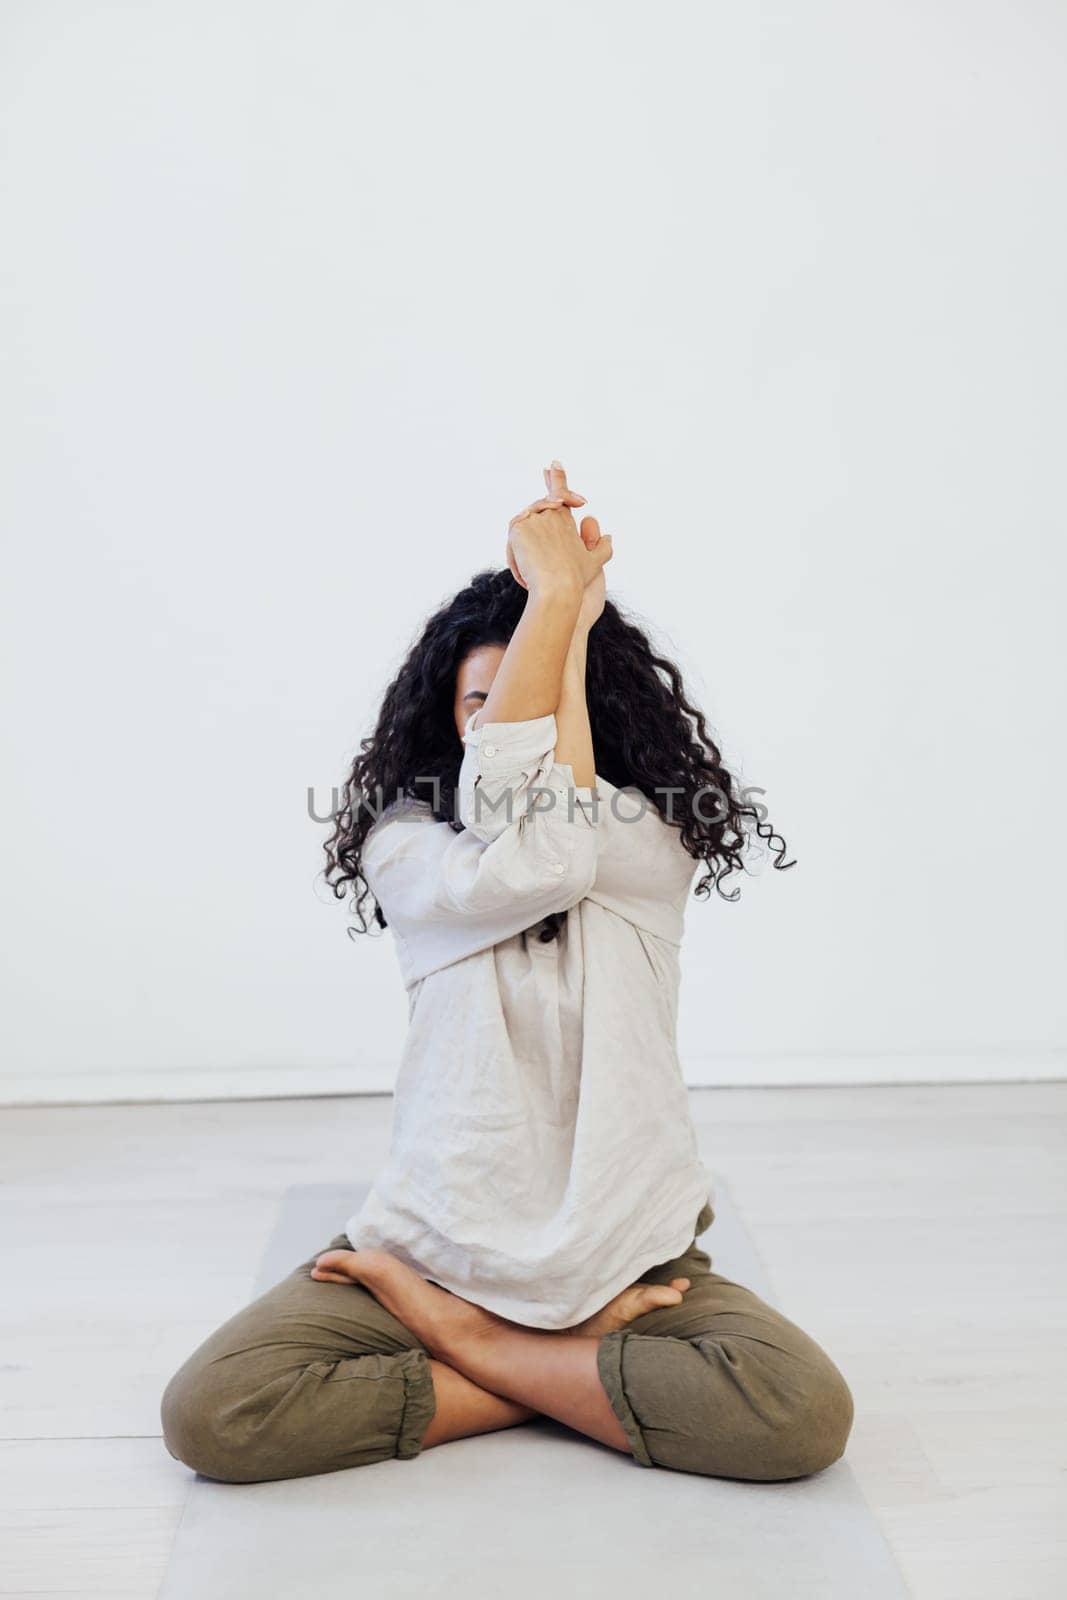 Beautiful woman yoga asana gymnastics body flexibility by Simakov